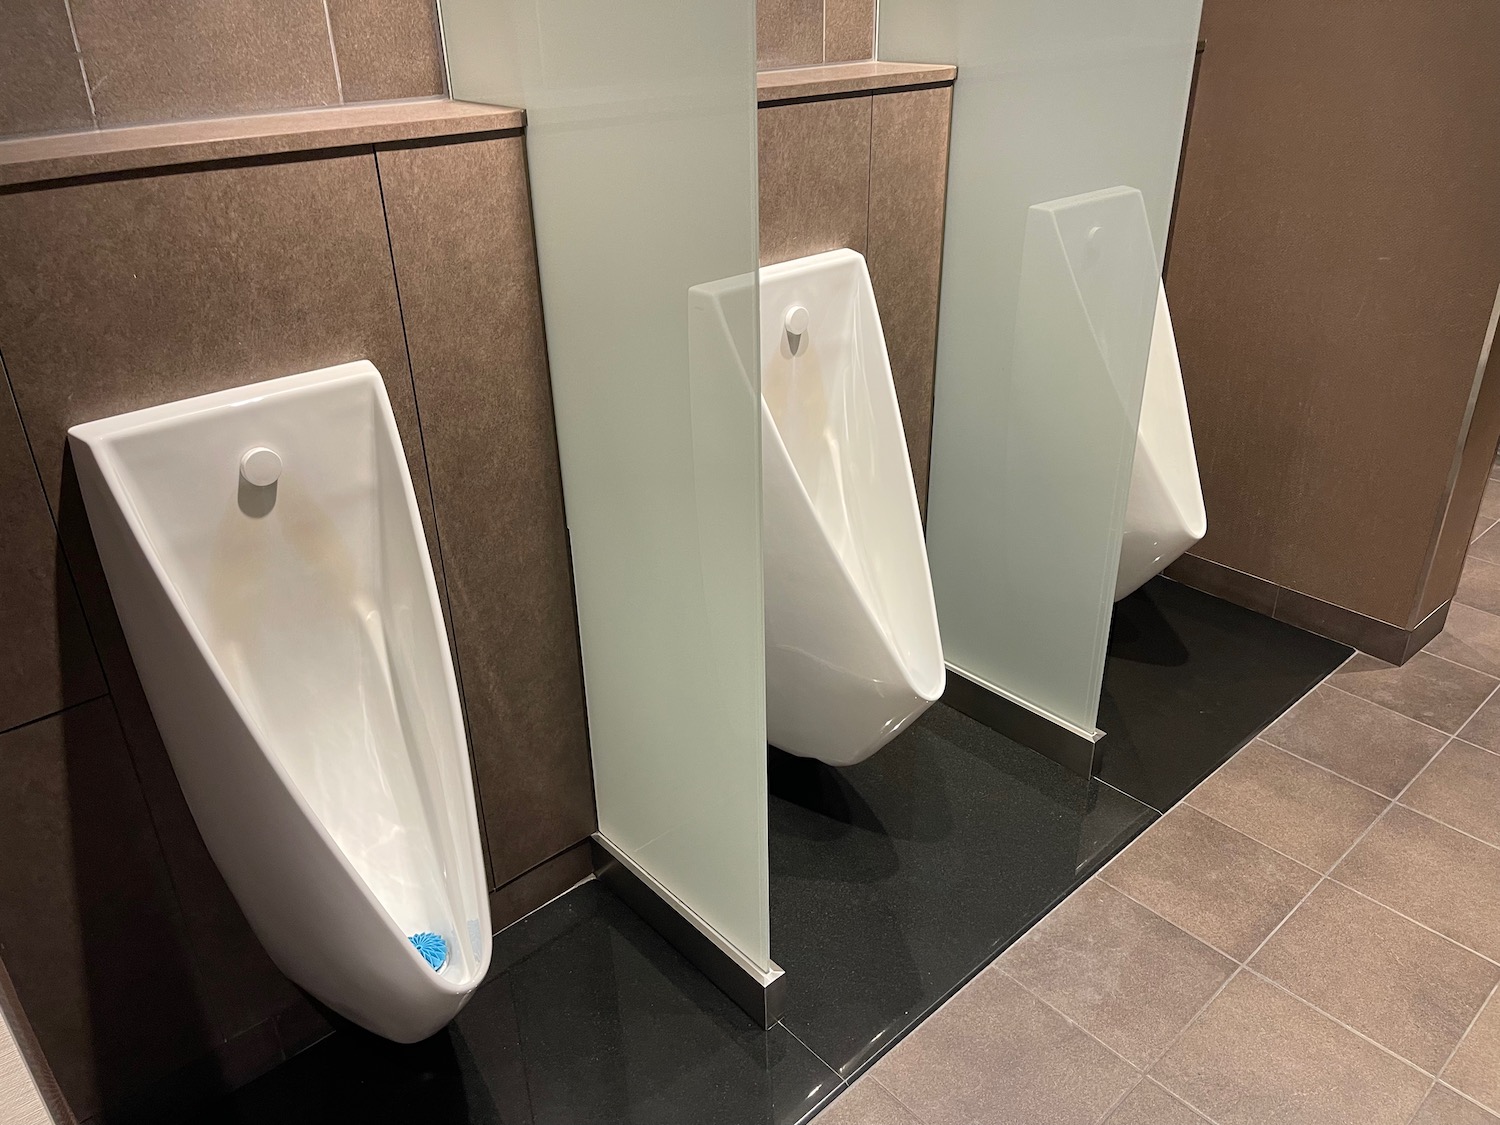 a row of urinals in a public bathroom